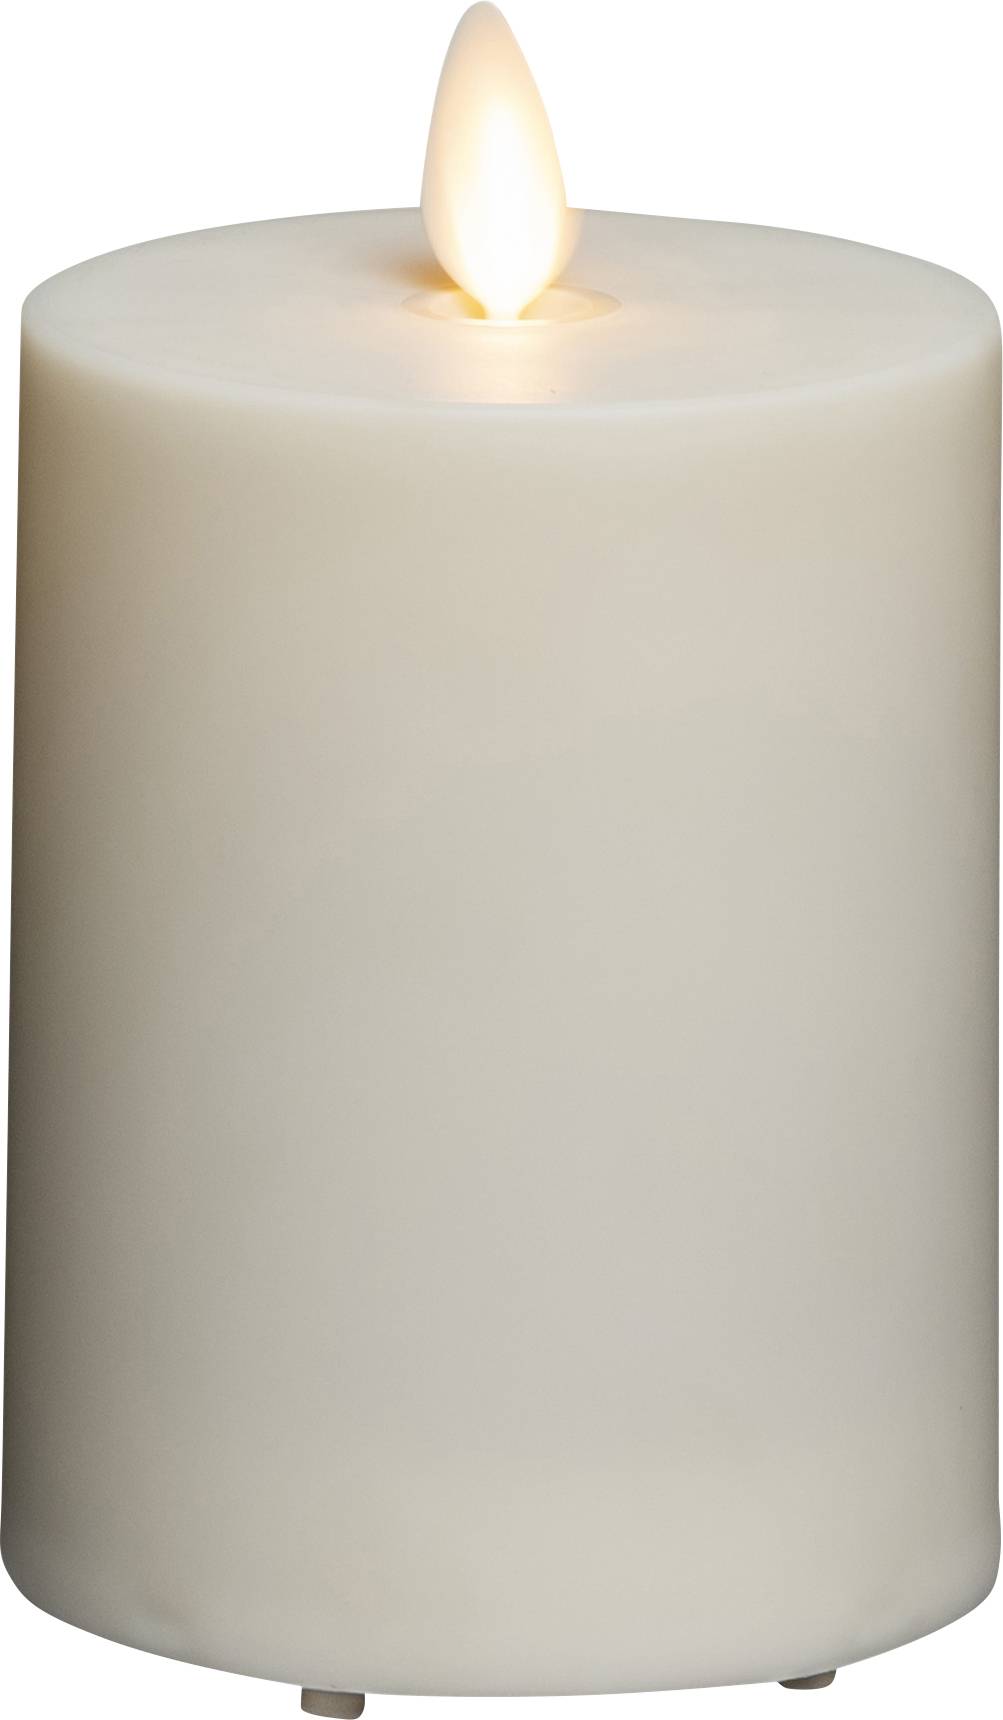 KONSTSMIDE 1634-115 LED Kerze, cremeweiß, 5H Timer, fernbedienbar, zugehörige Fernbedienung: 1651-70